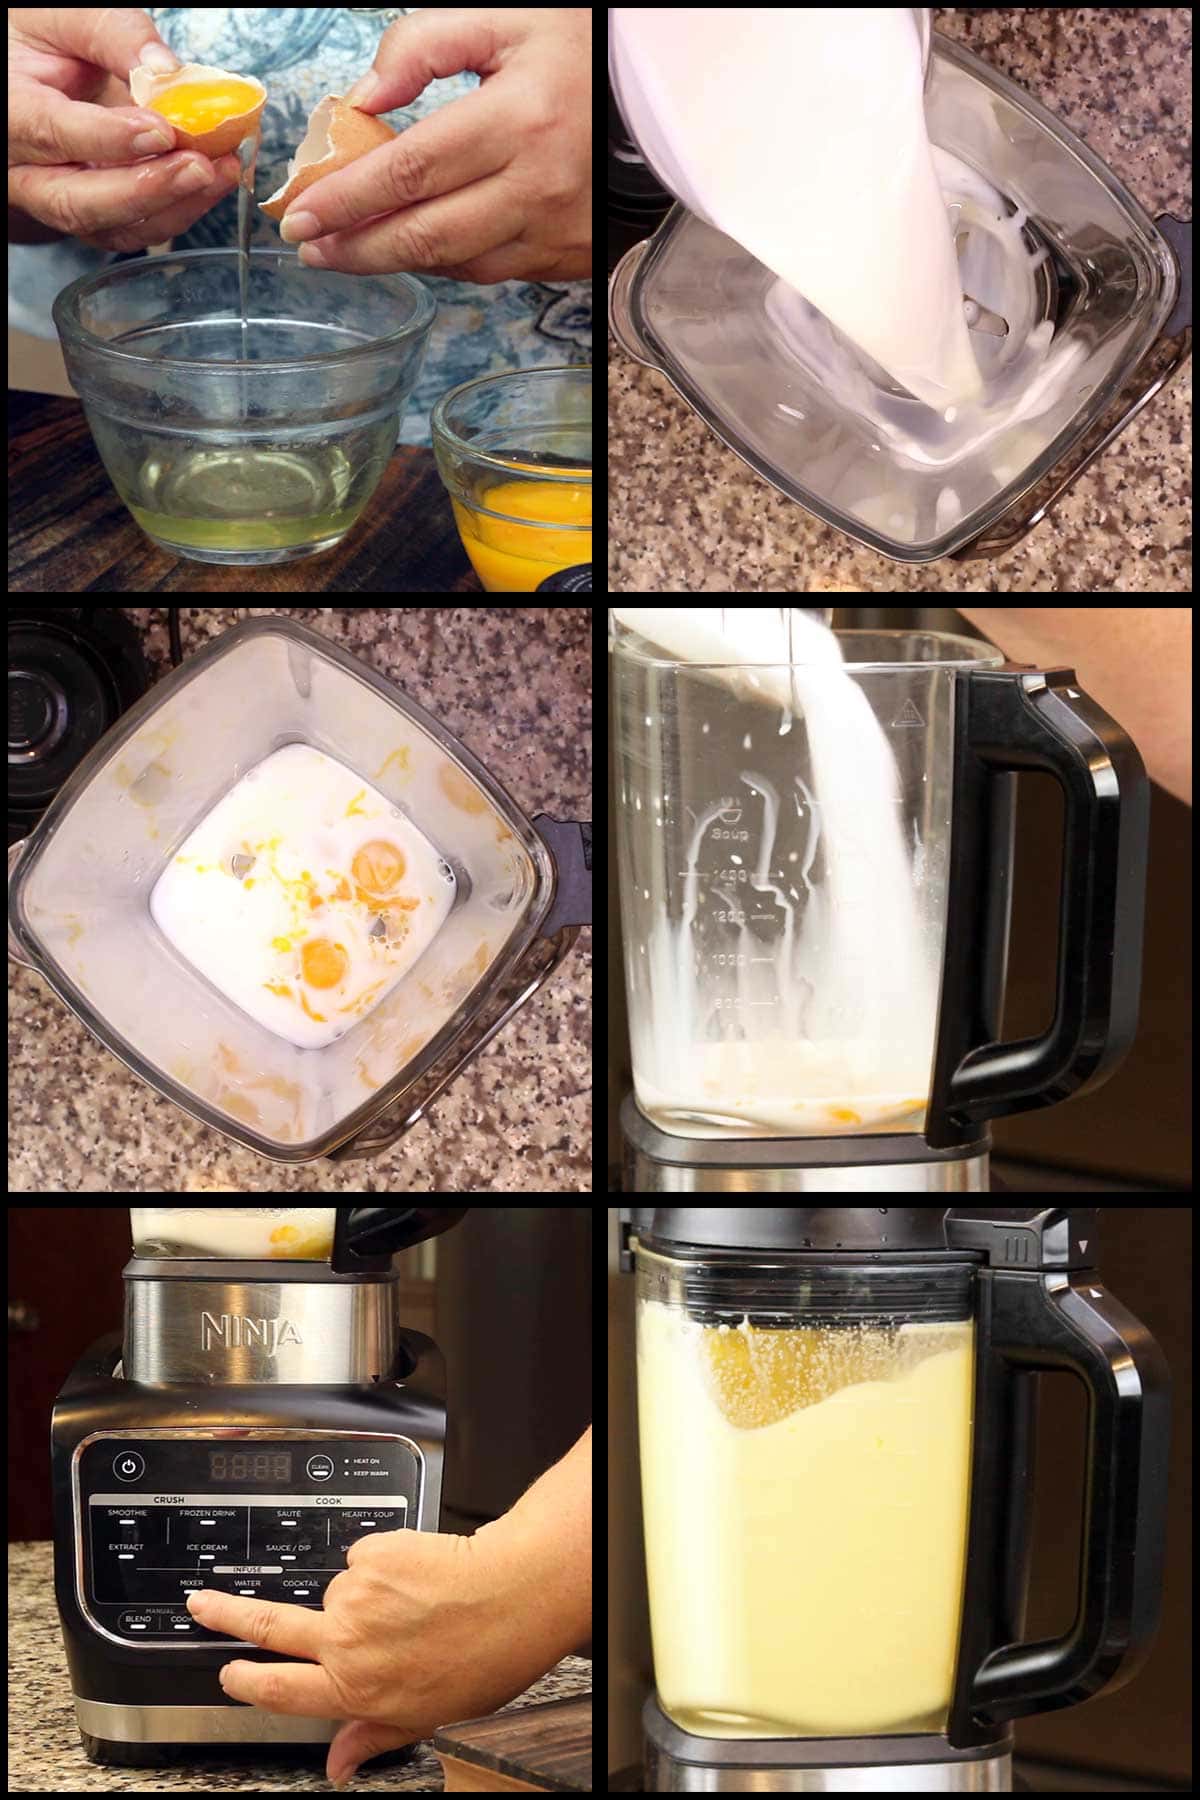 Adding egg yolks, sugar, milk to blender for heating